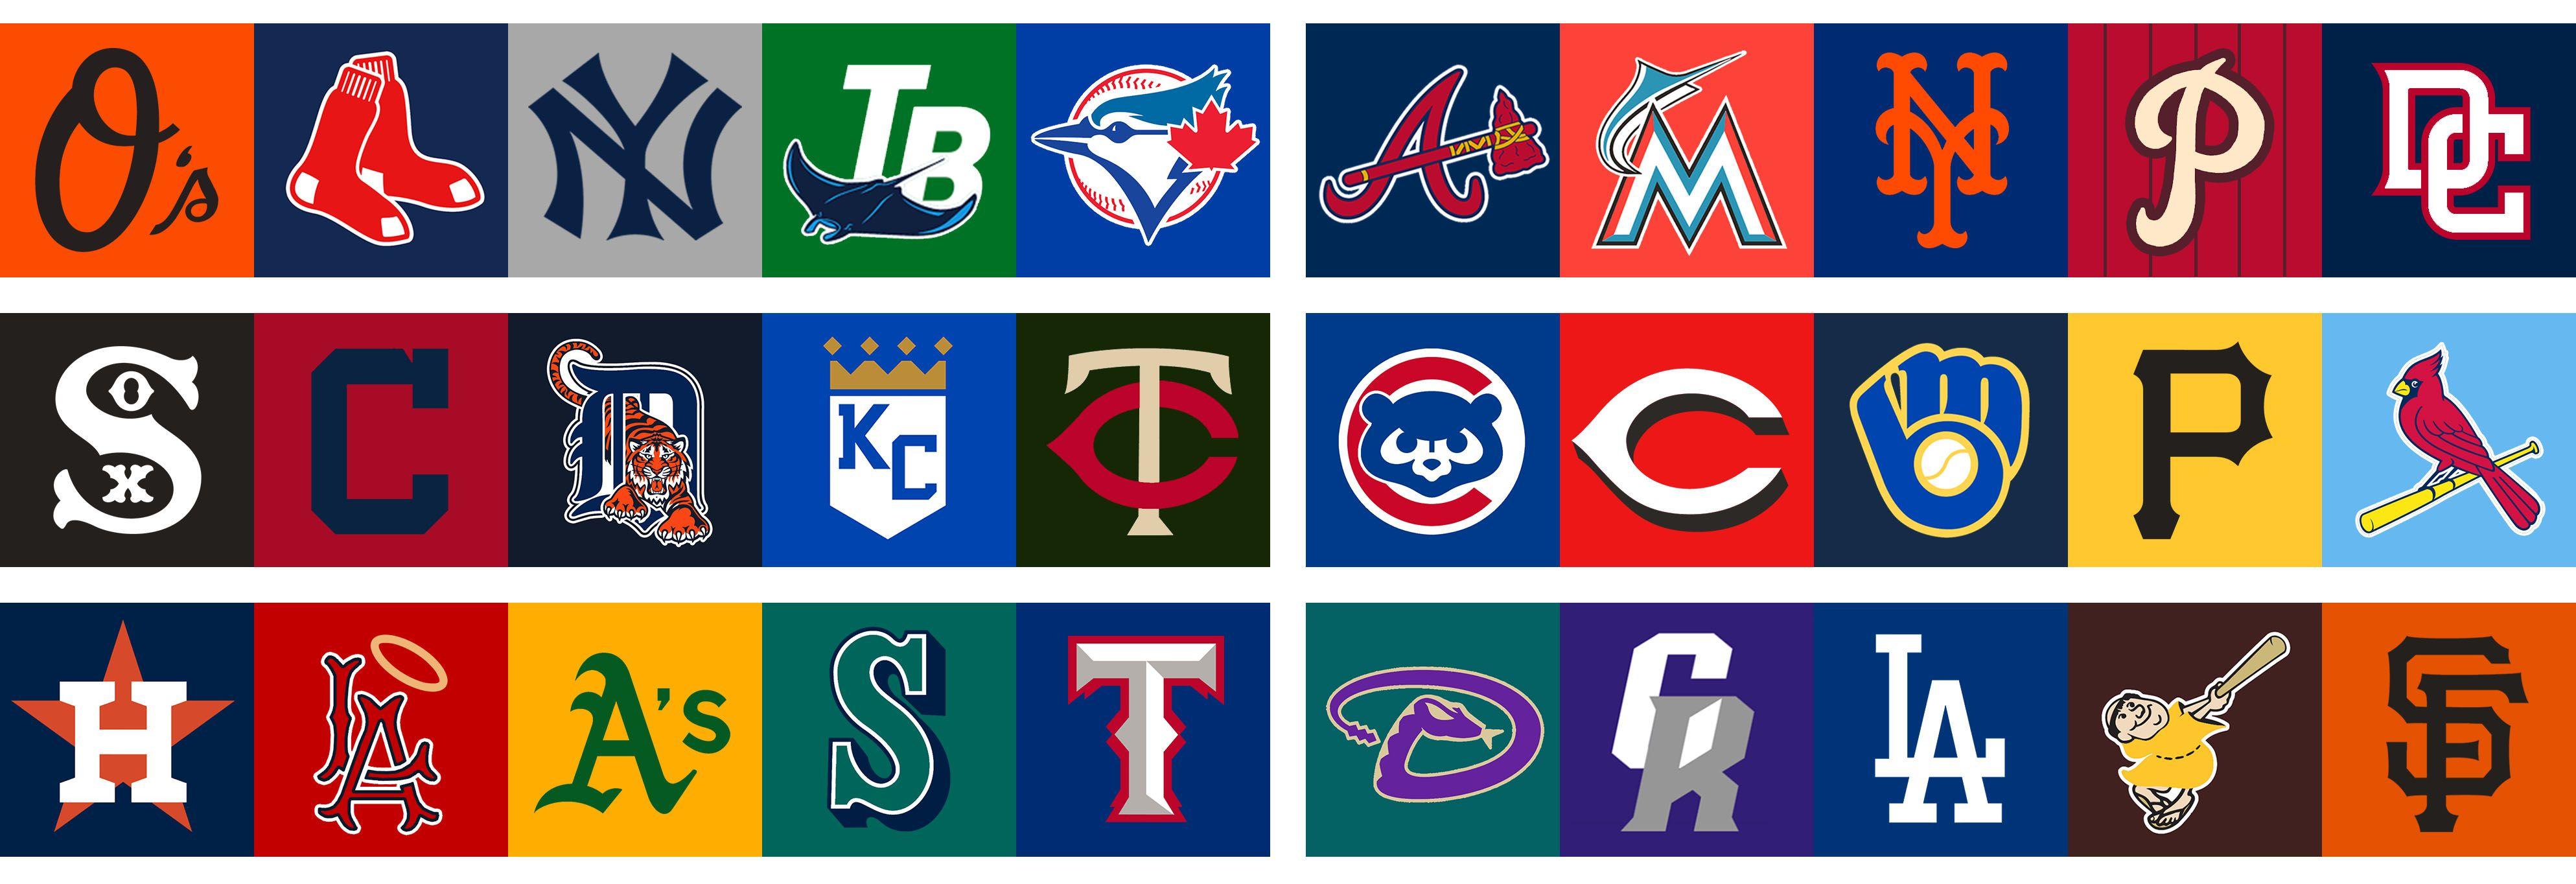 UA Sports Logo - MLB x UA 2020 (indefinite break) - Concepts - Chris Creamer's Sports ...